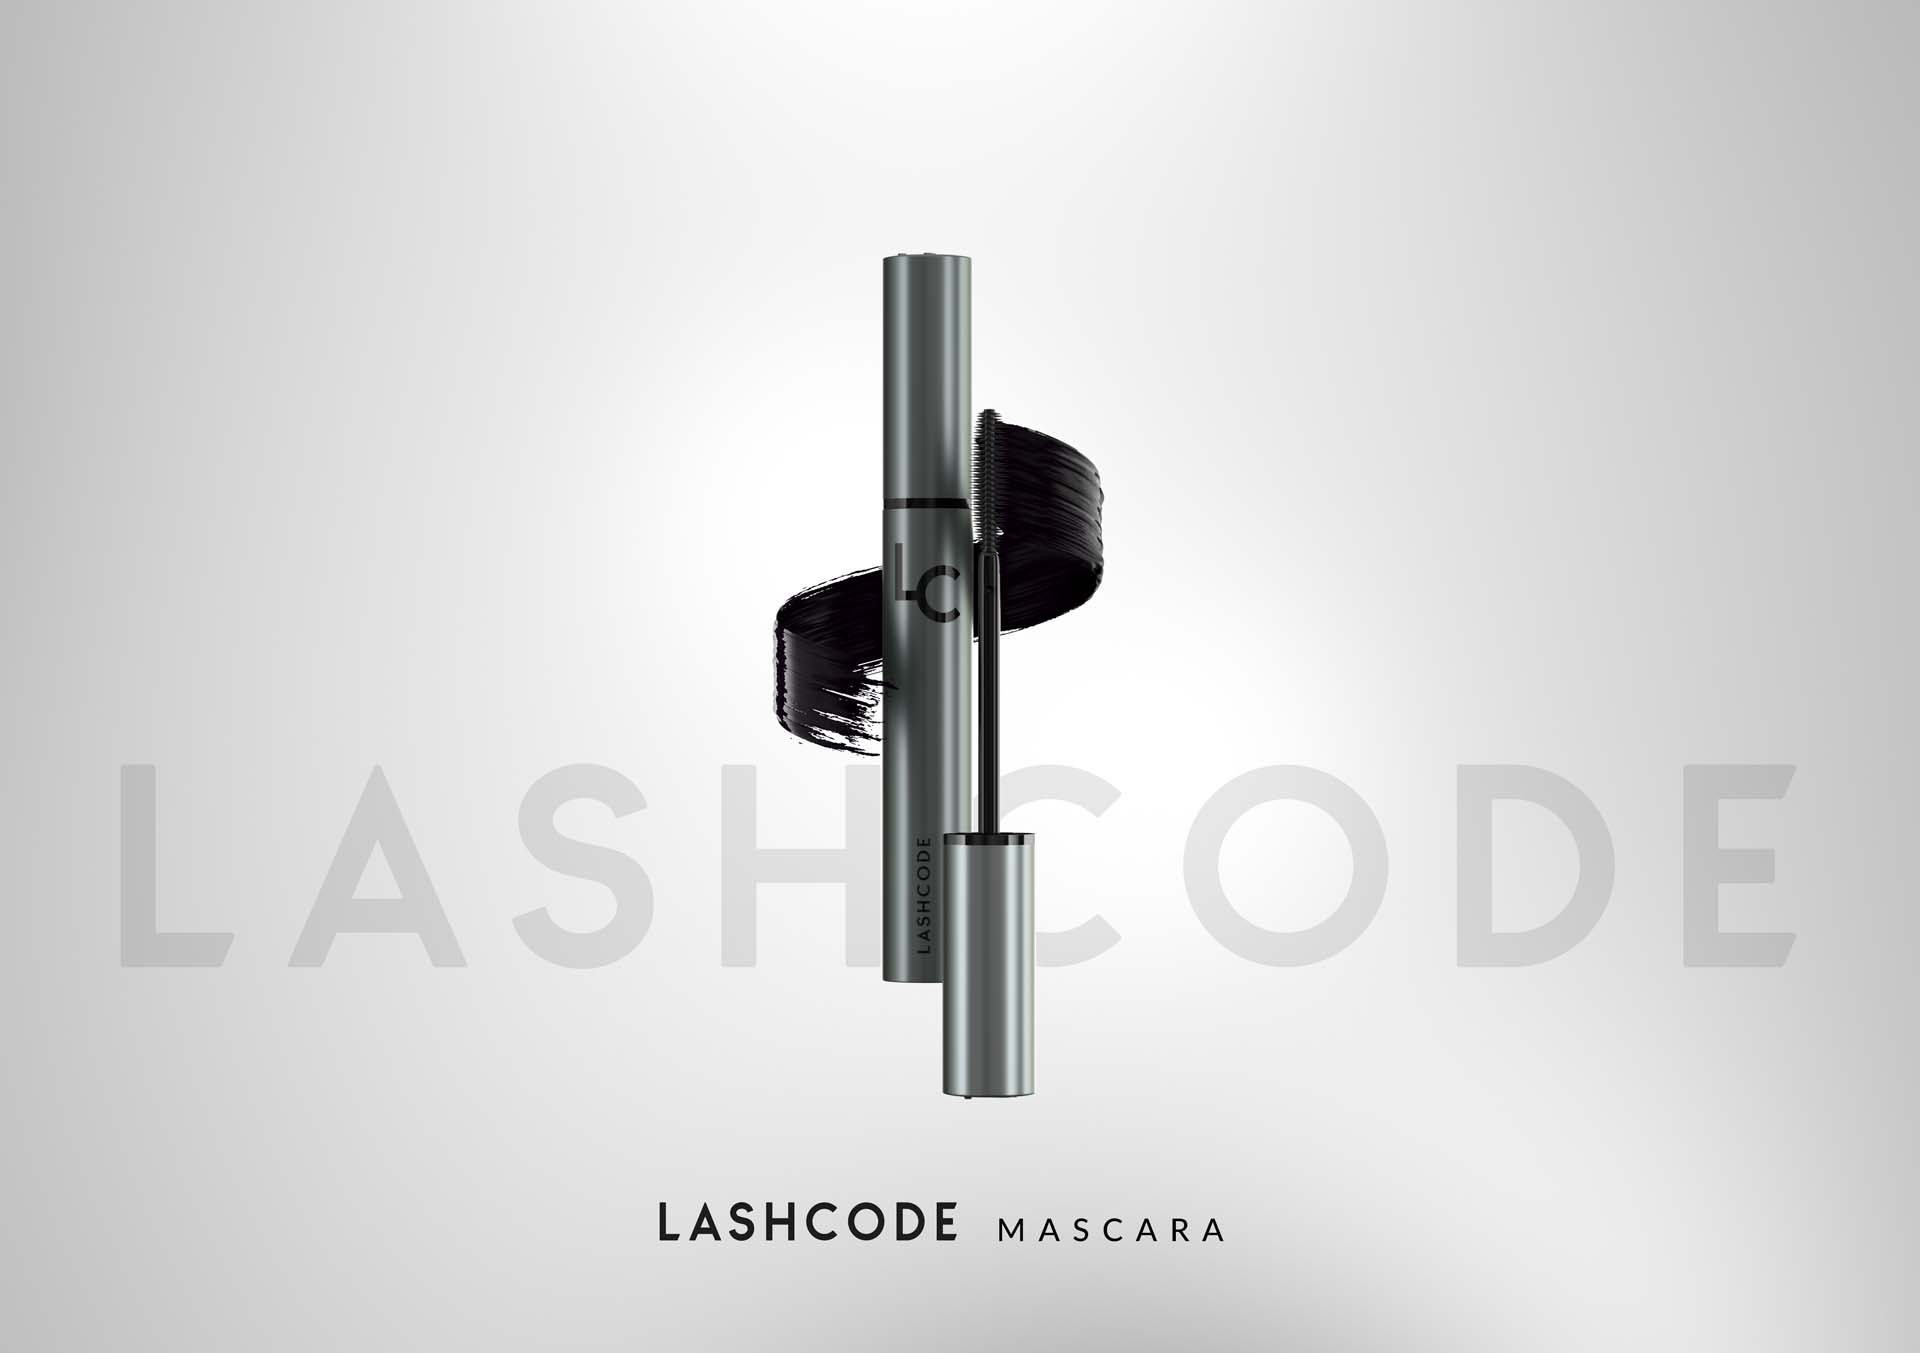 Lashcode Mascara. Definition of Beauty in Luxury Version